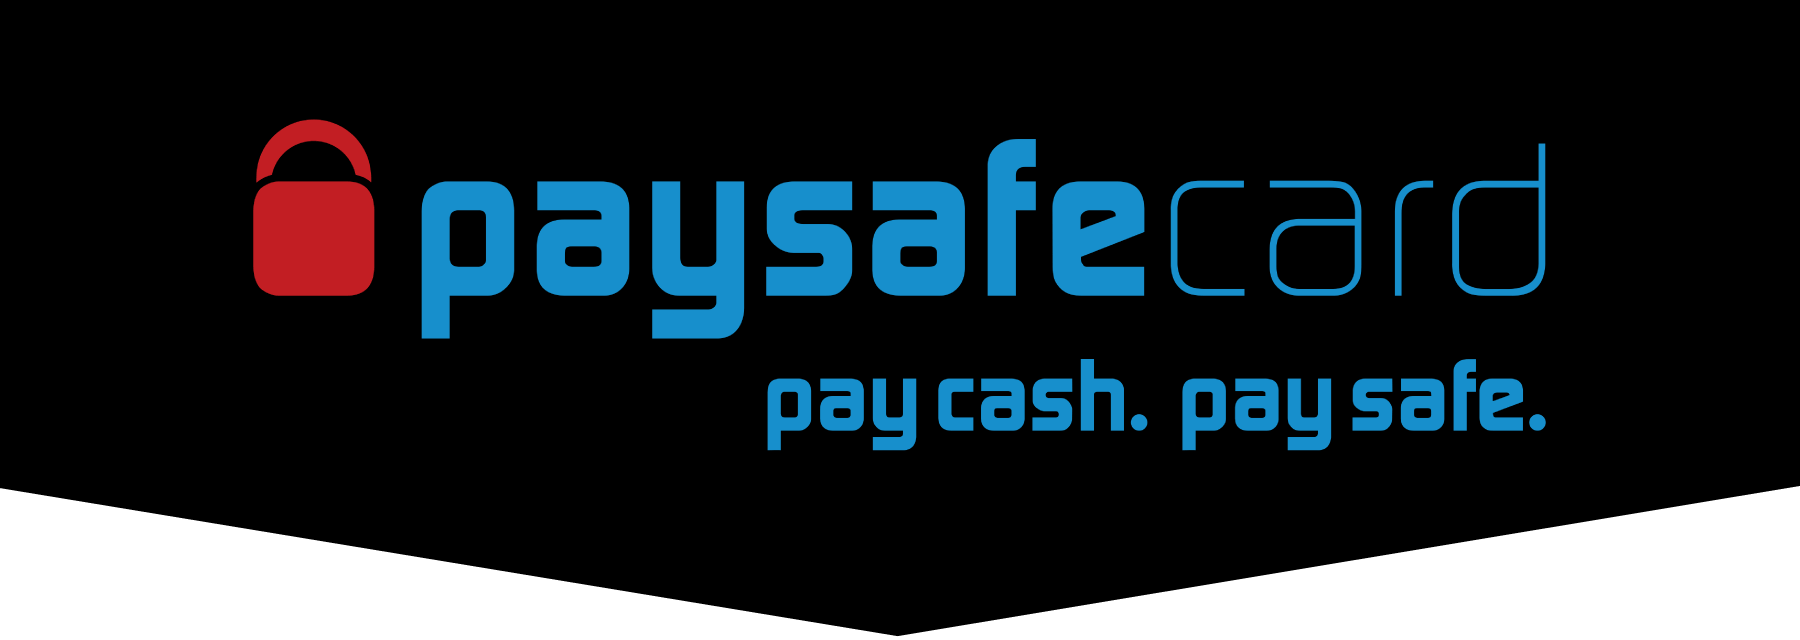 paysafecard-online-canada-casino-payment